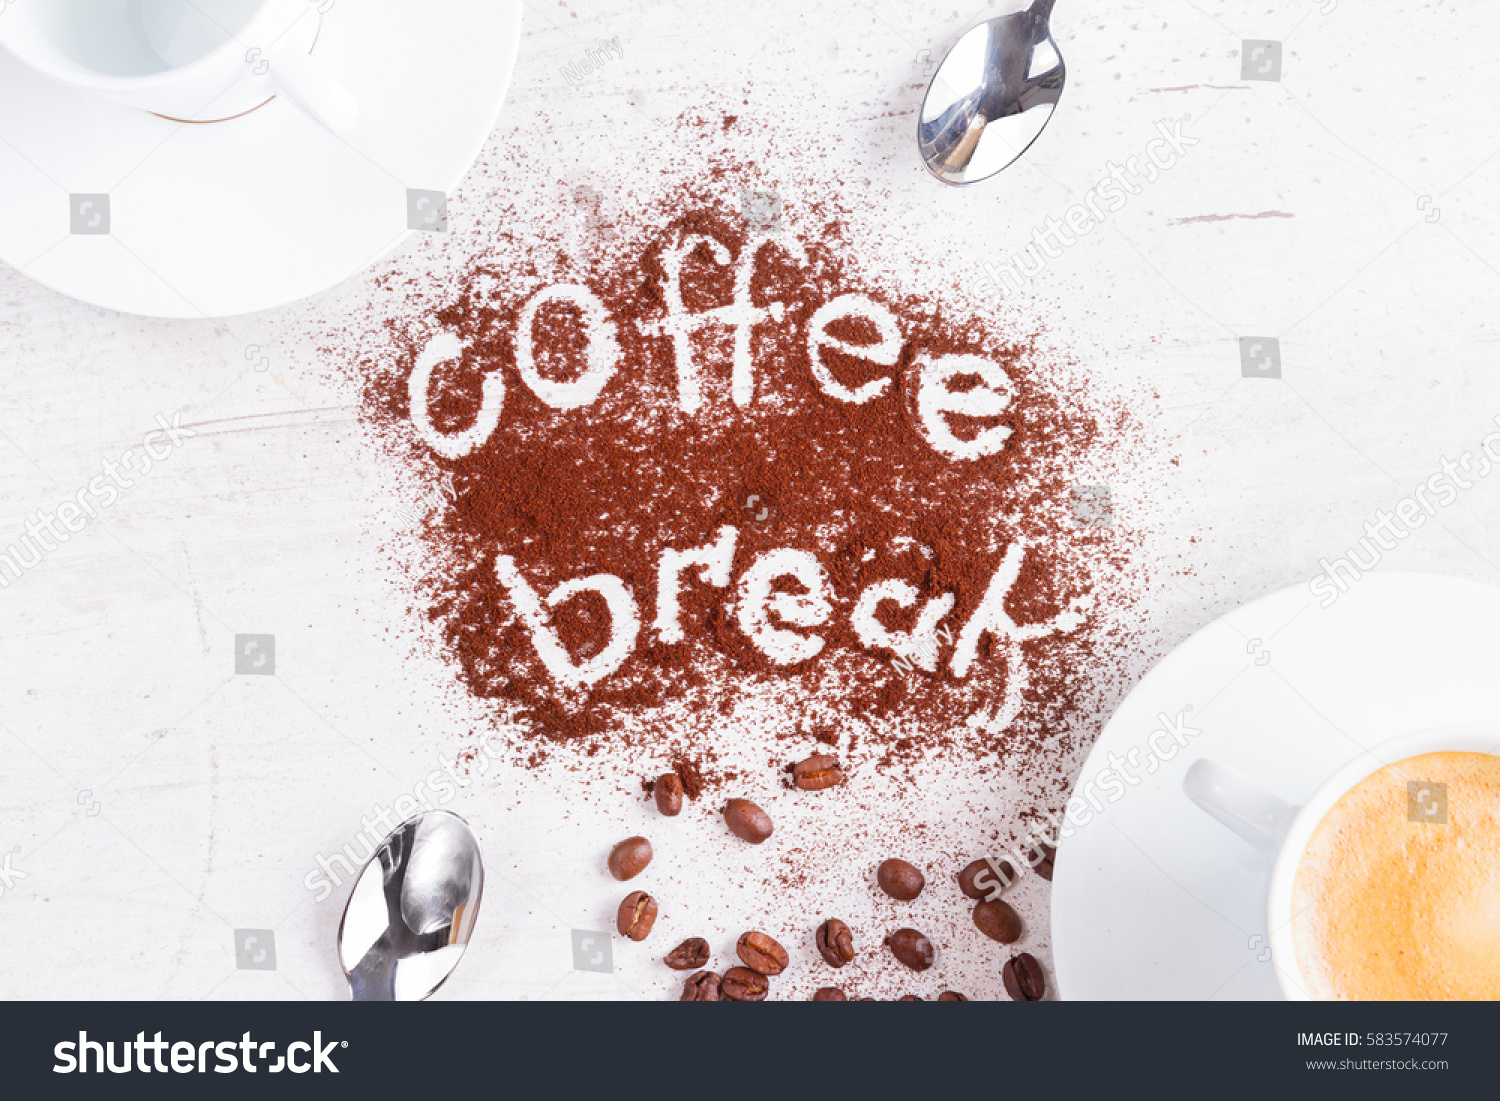 coffee break concept - cups of espresso, spoons and coffee break lettering #583574077